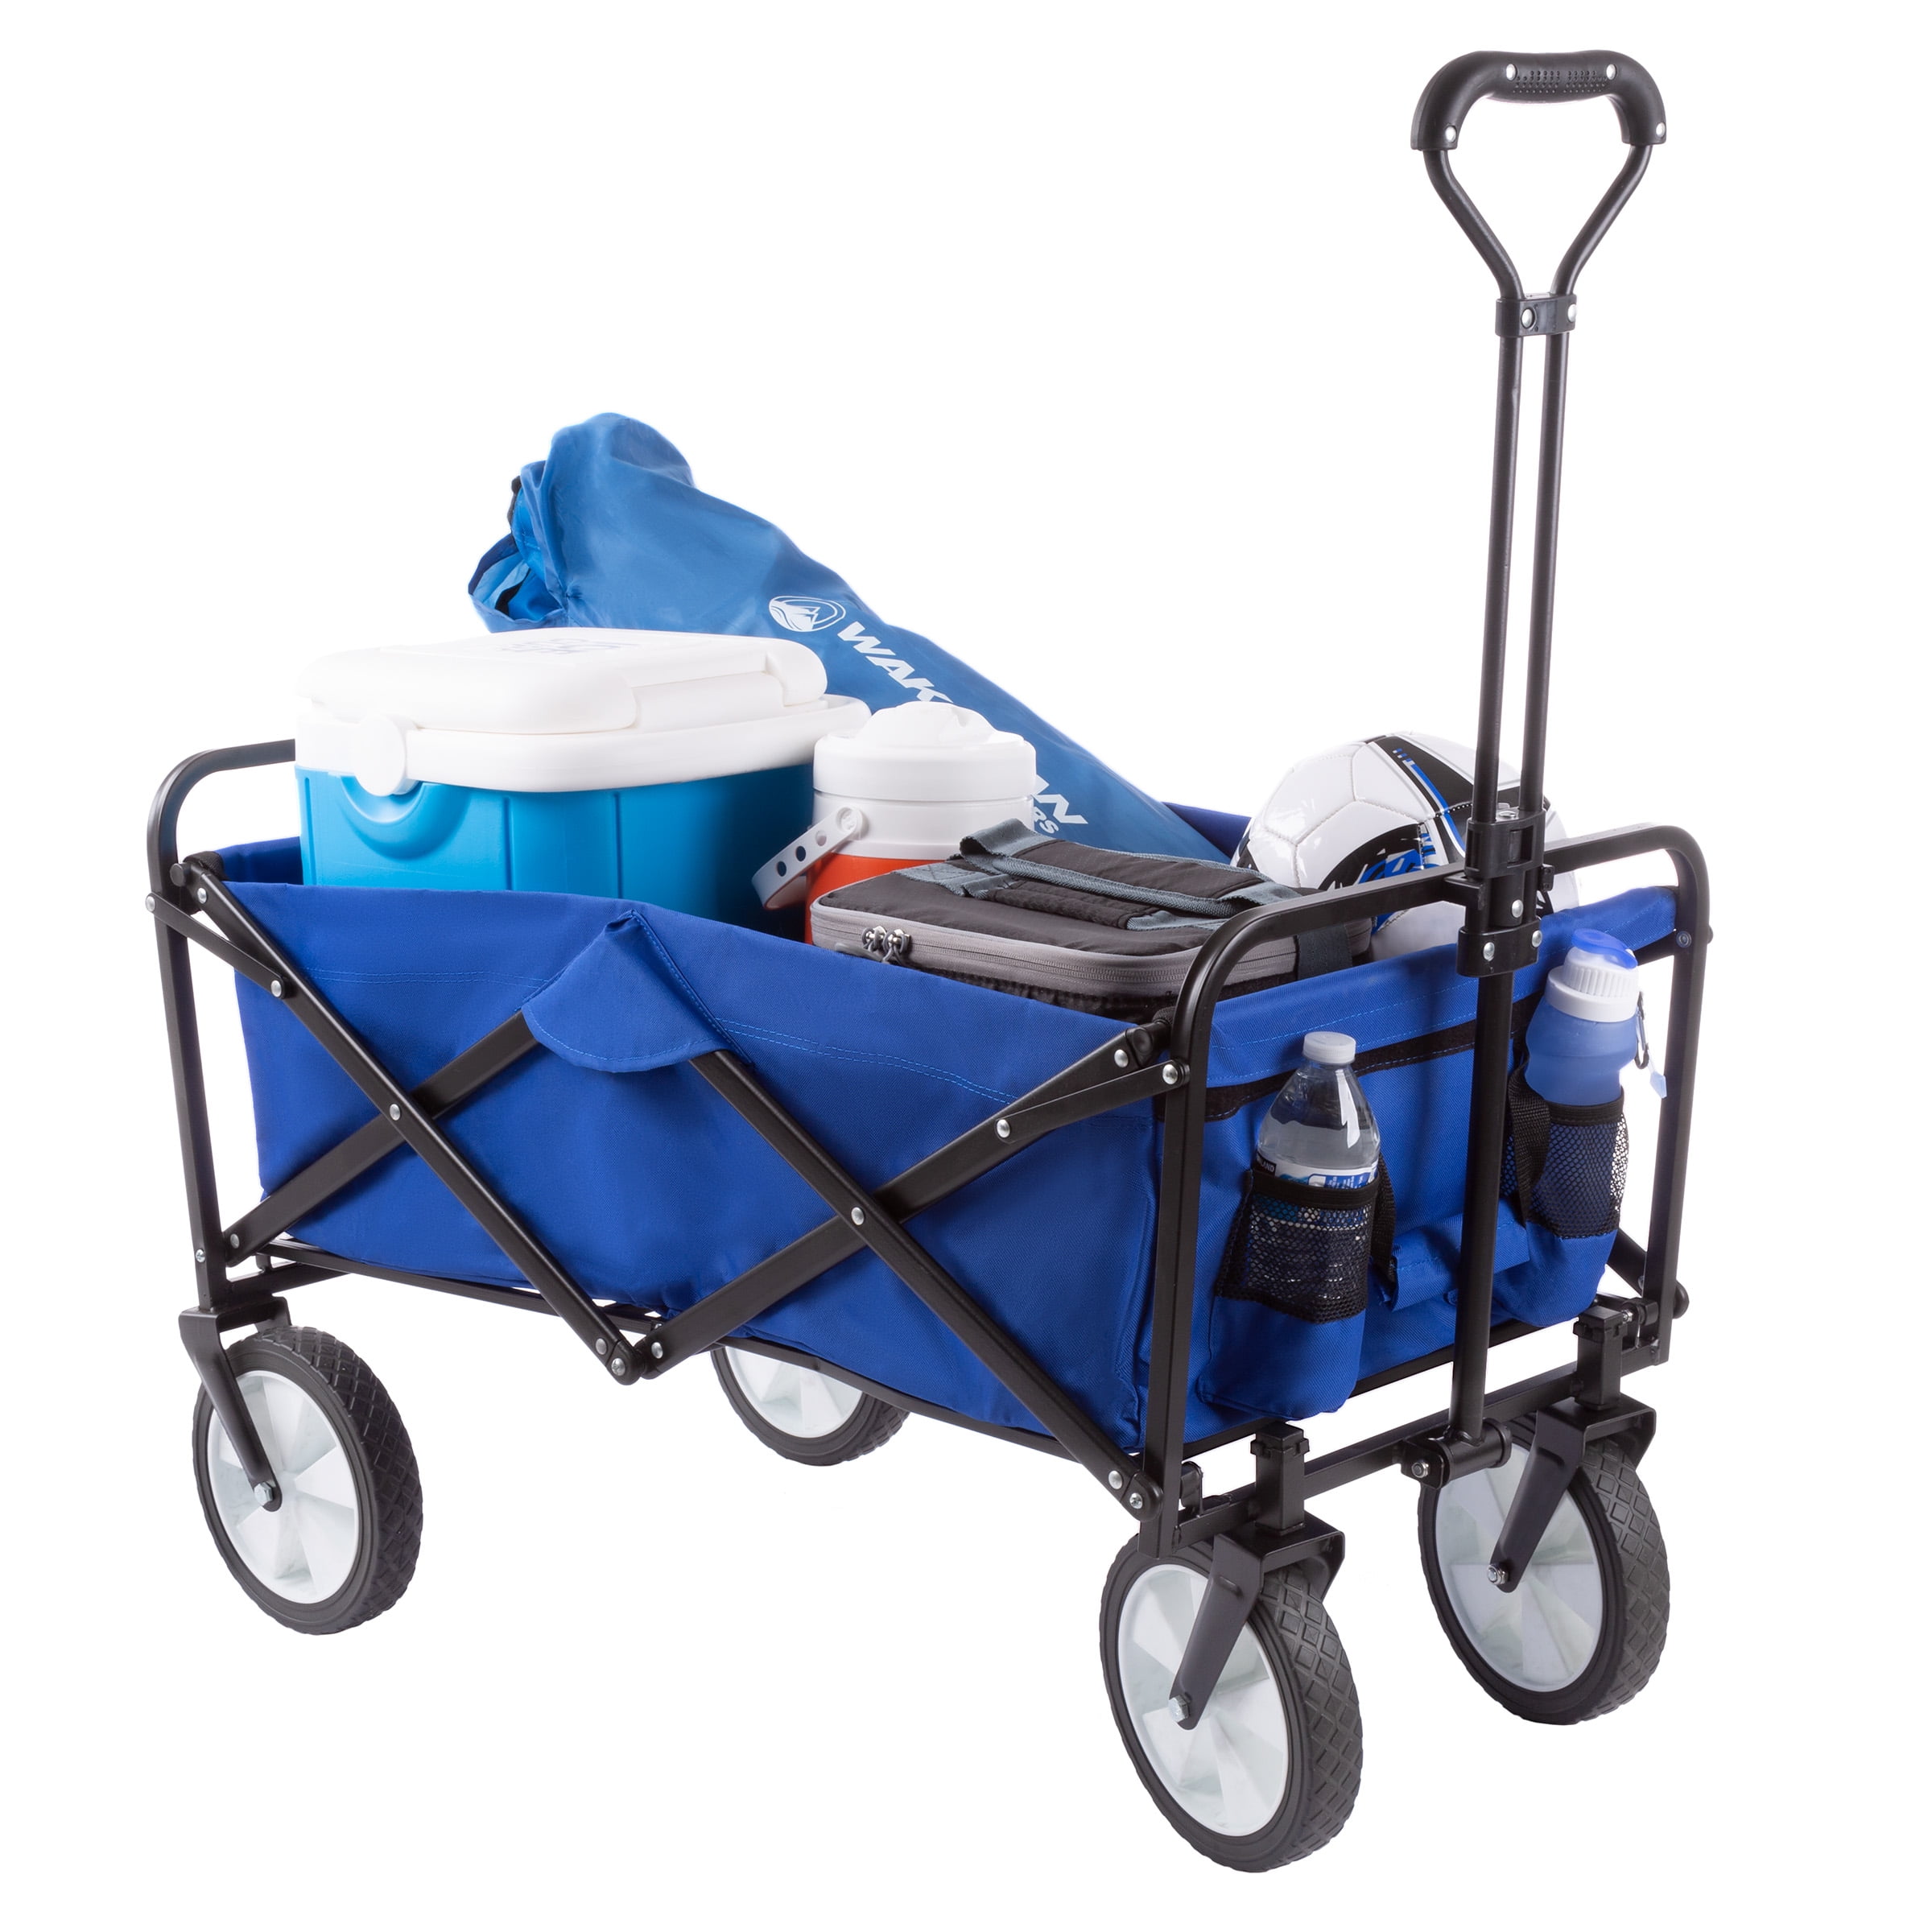 Compact Size Quad Folding Wagon Big Blue Cart Camping Gear w/ Telescoping Handle 